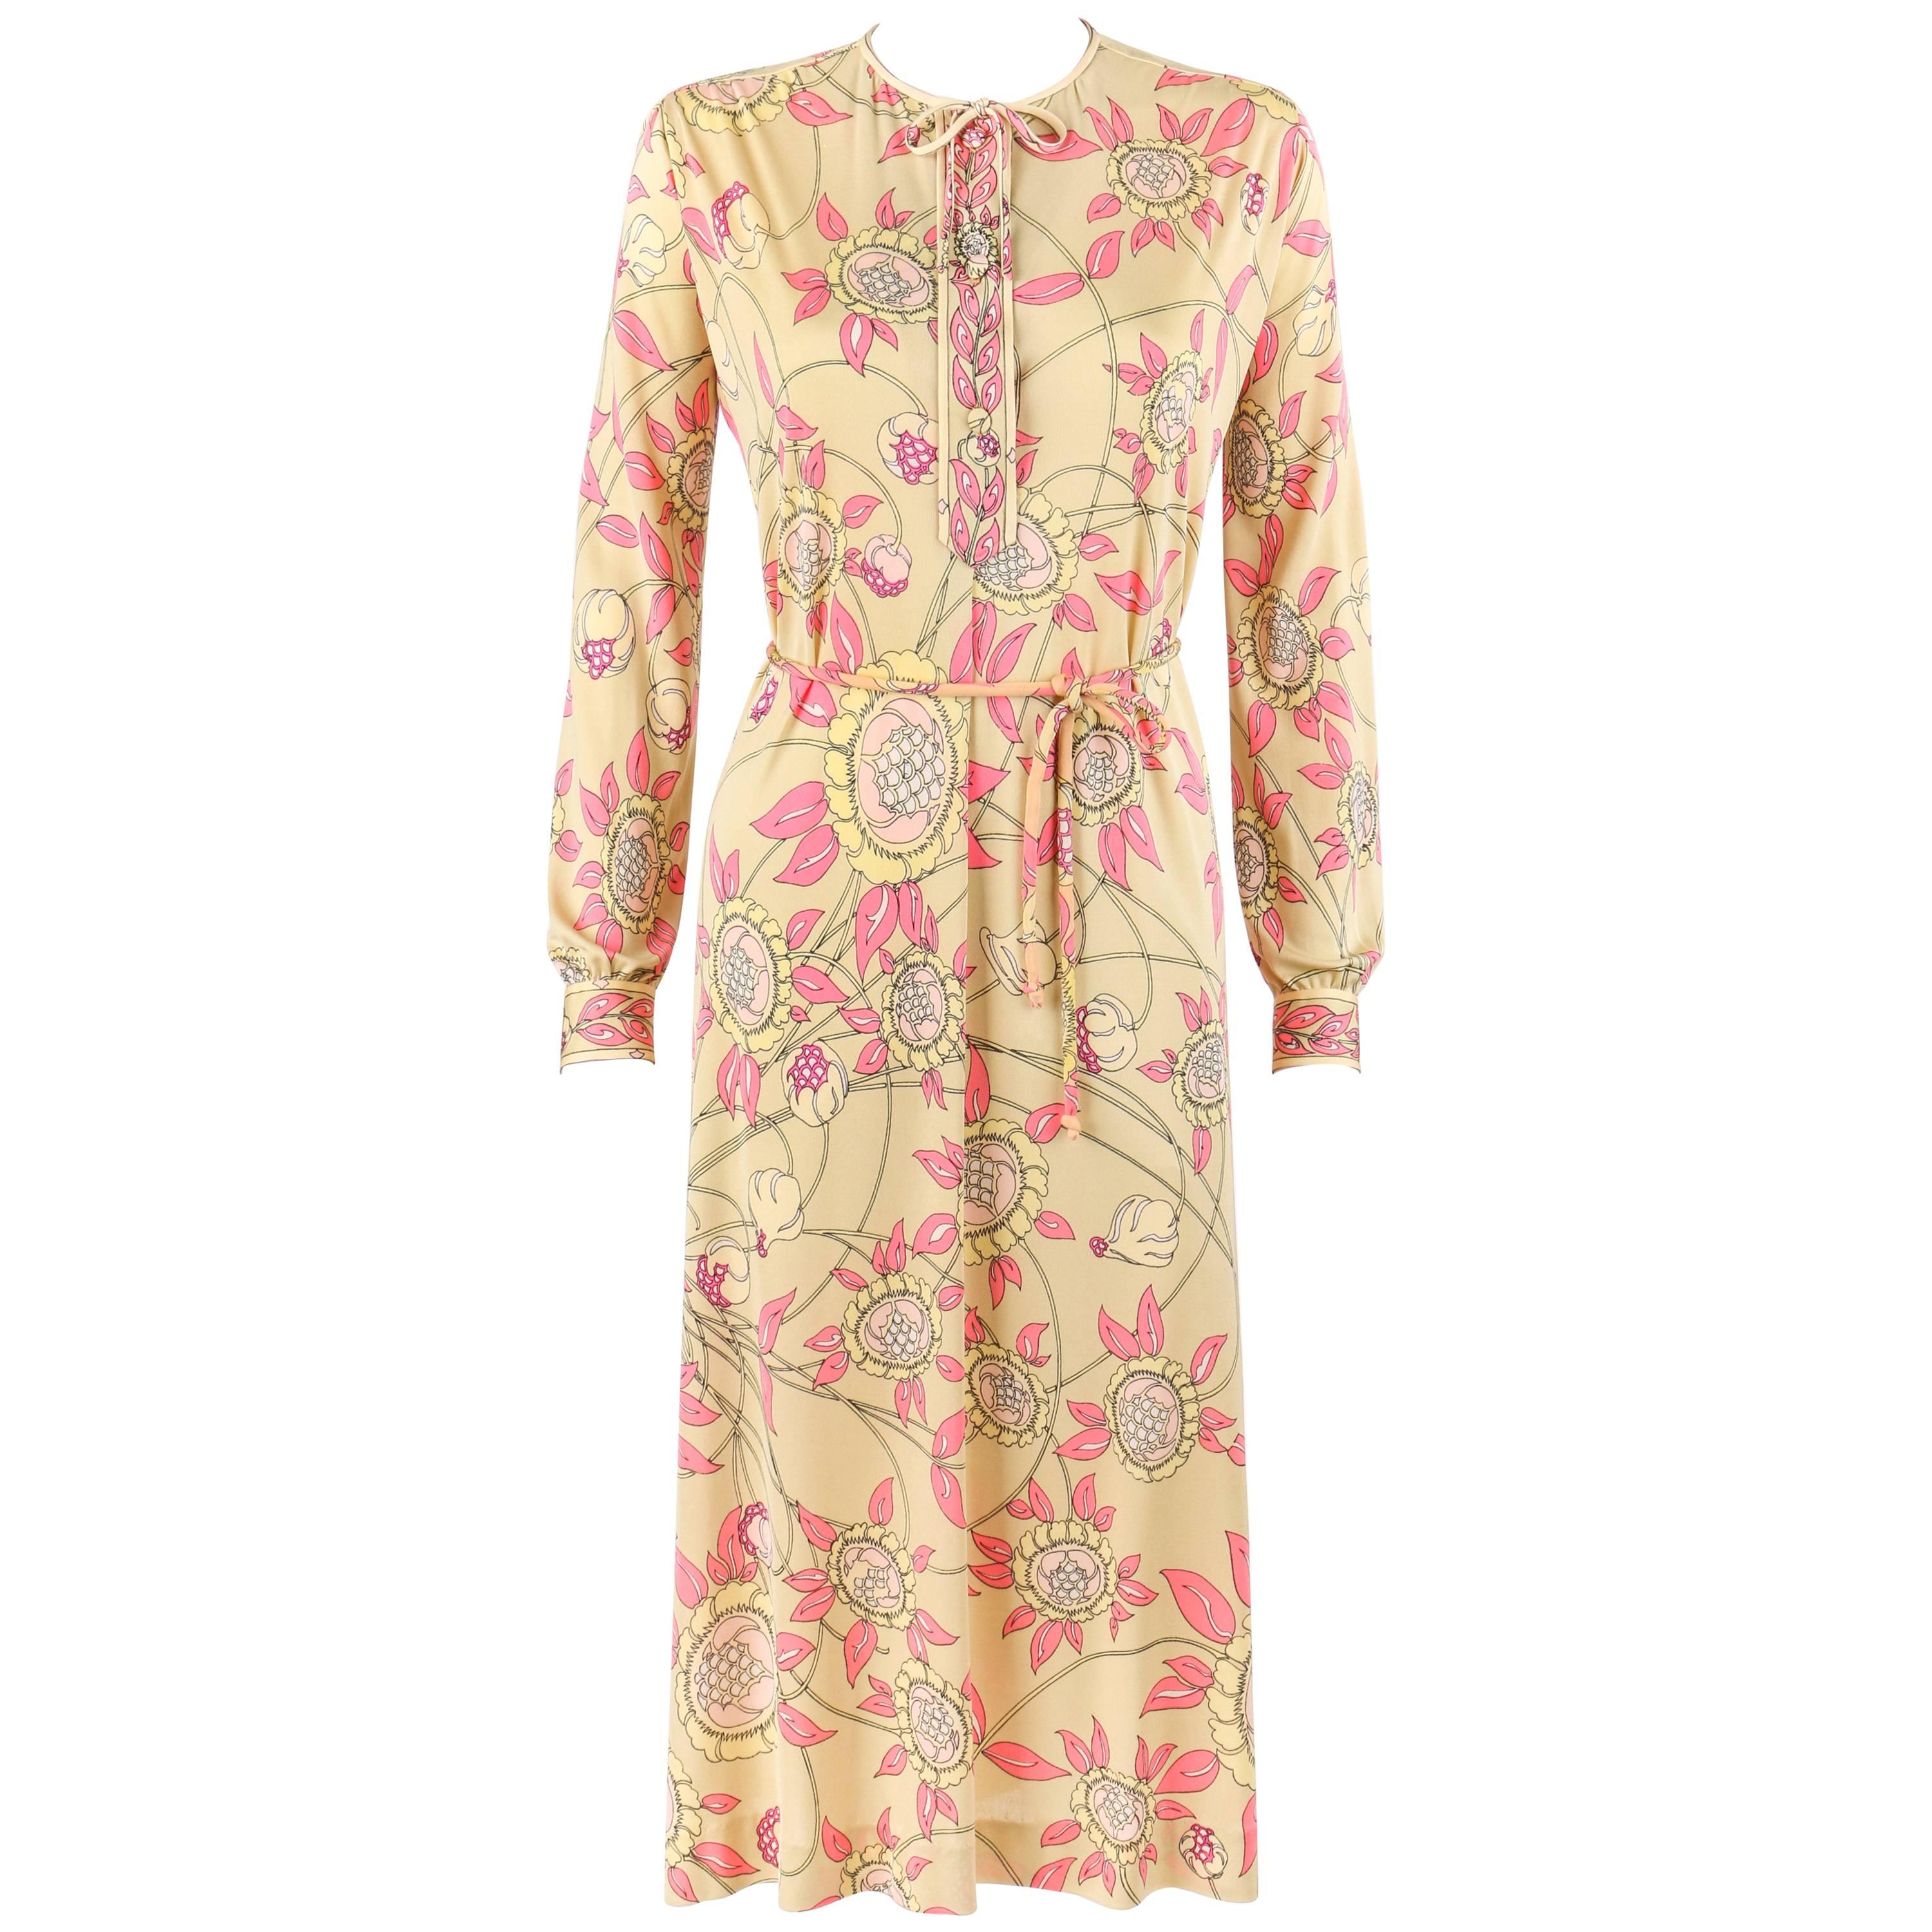 EMILIO PUCCI c.1970s Beige Floral Signature Print Silk Jersey Belted Shift Dress